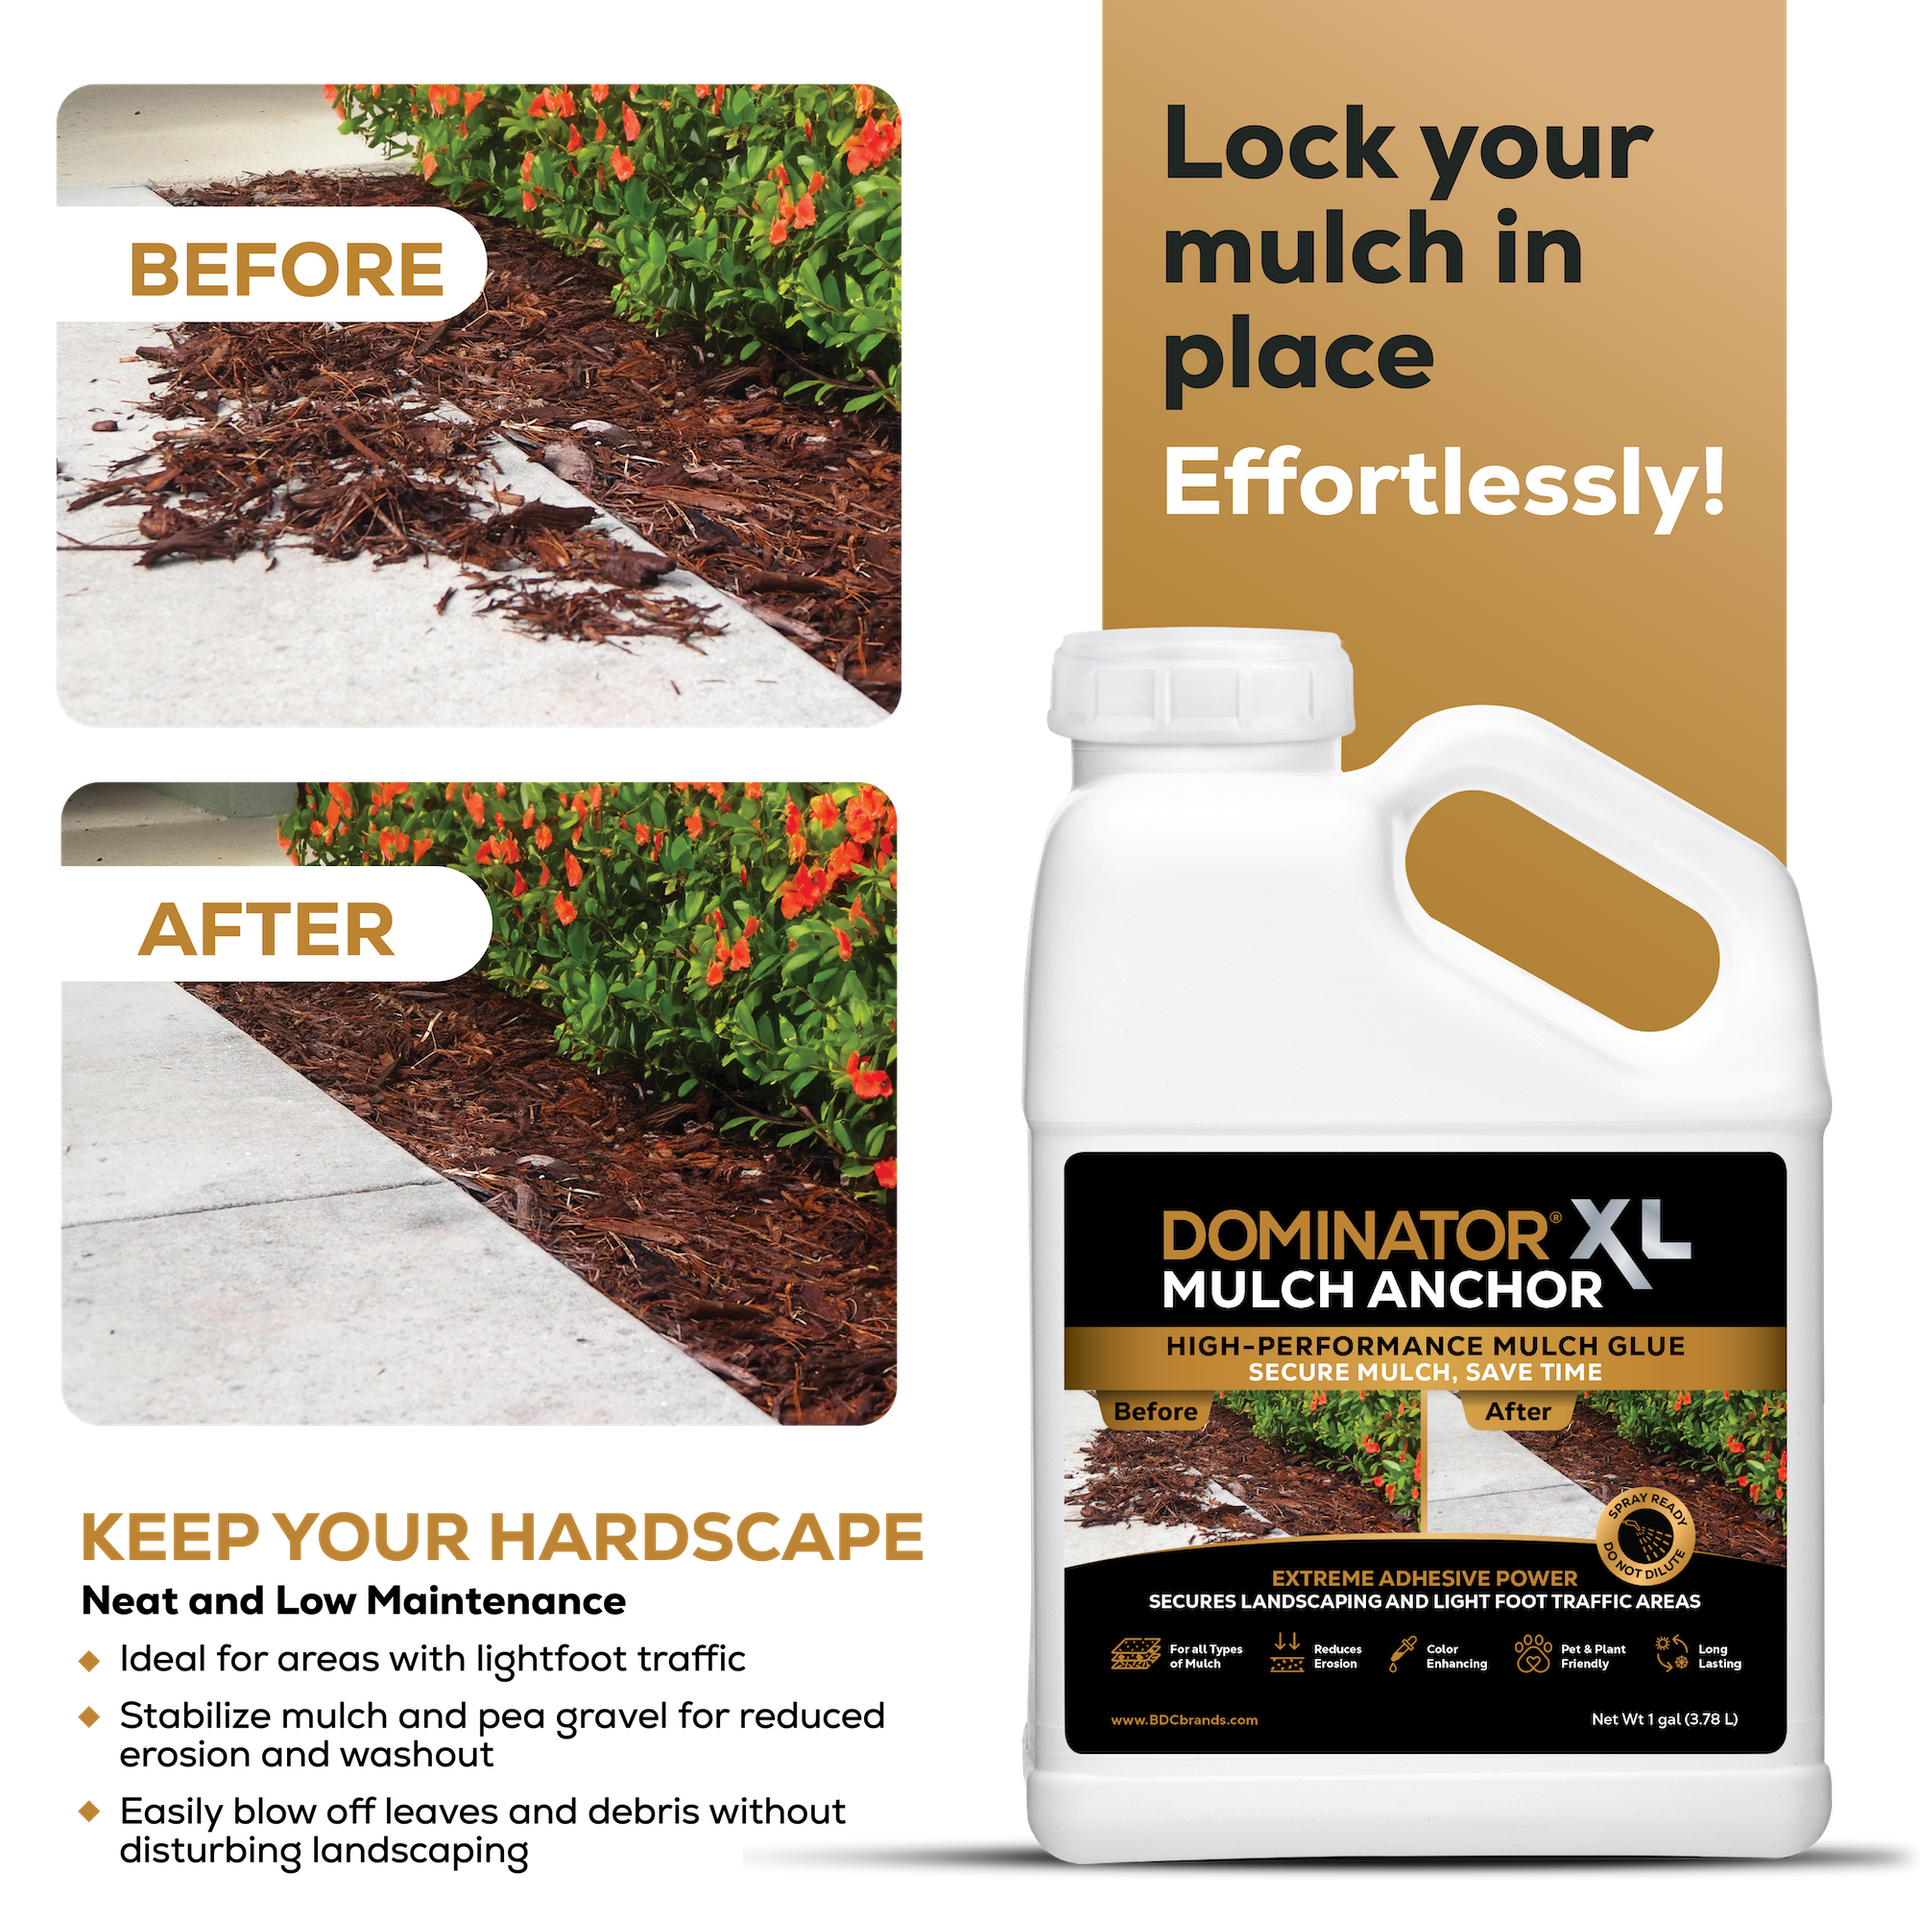 DOMINATOR XL Mulch Anchor - Best Mulch Glue for Your Landscape